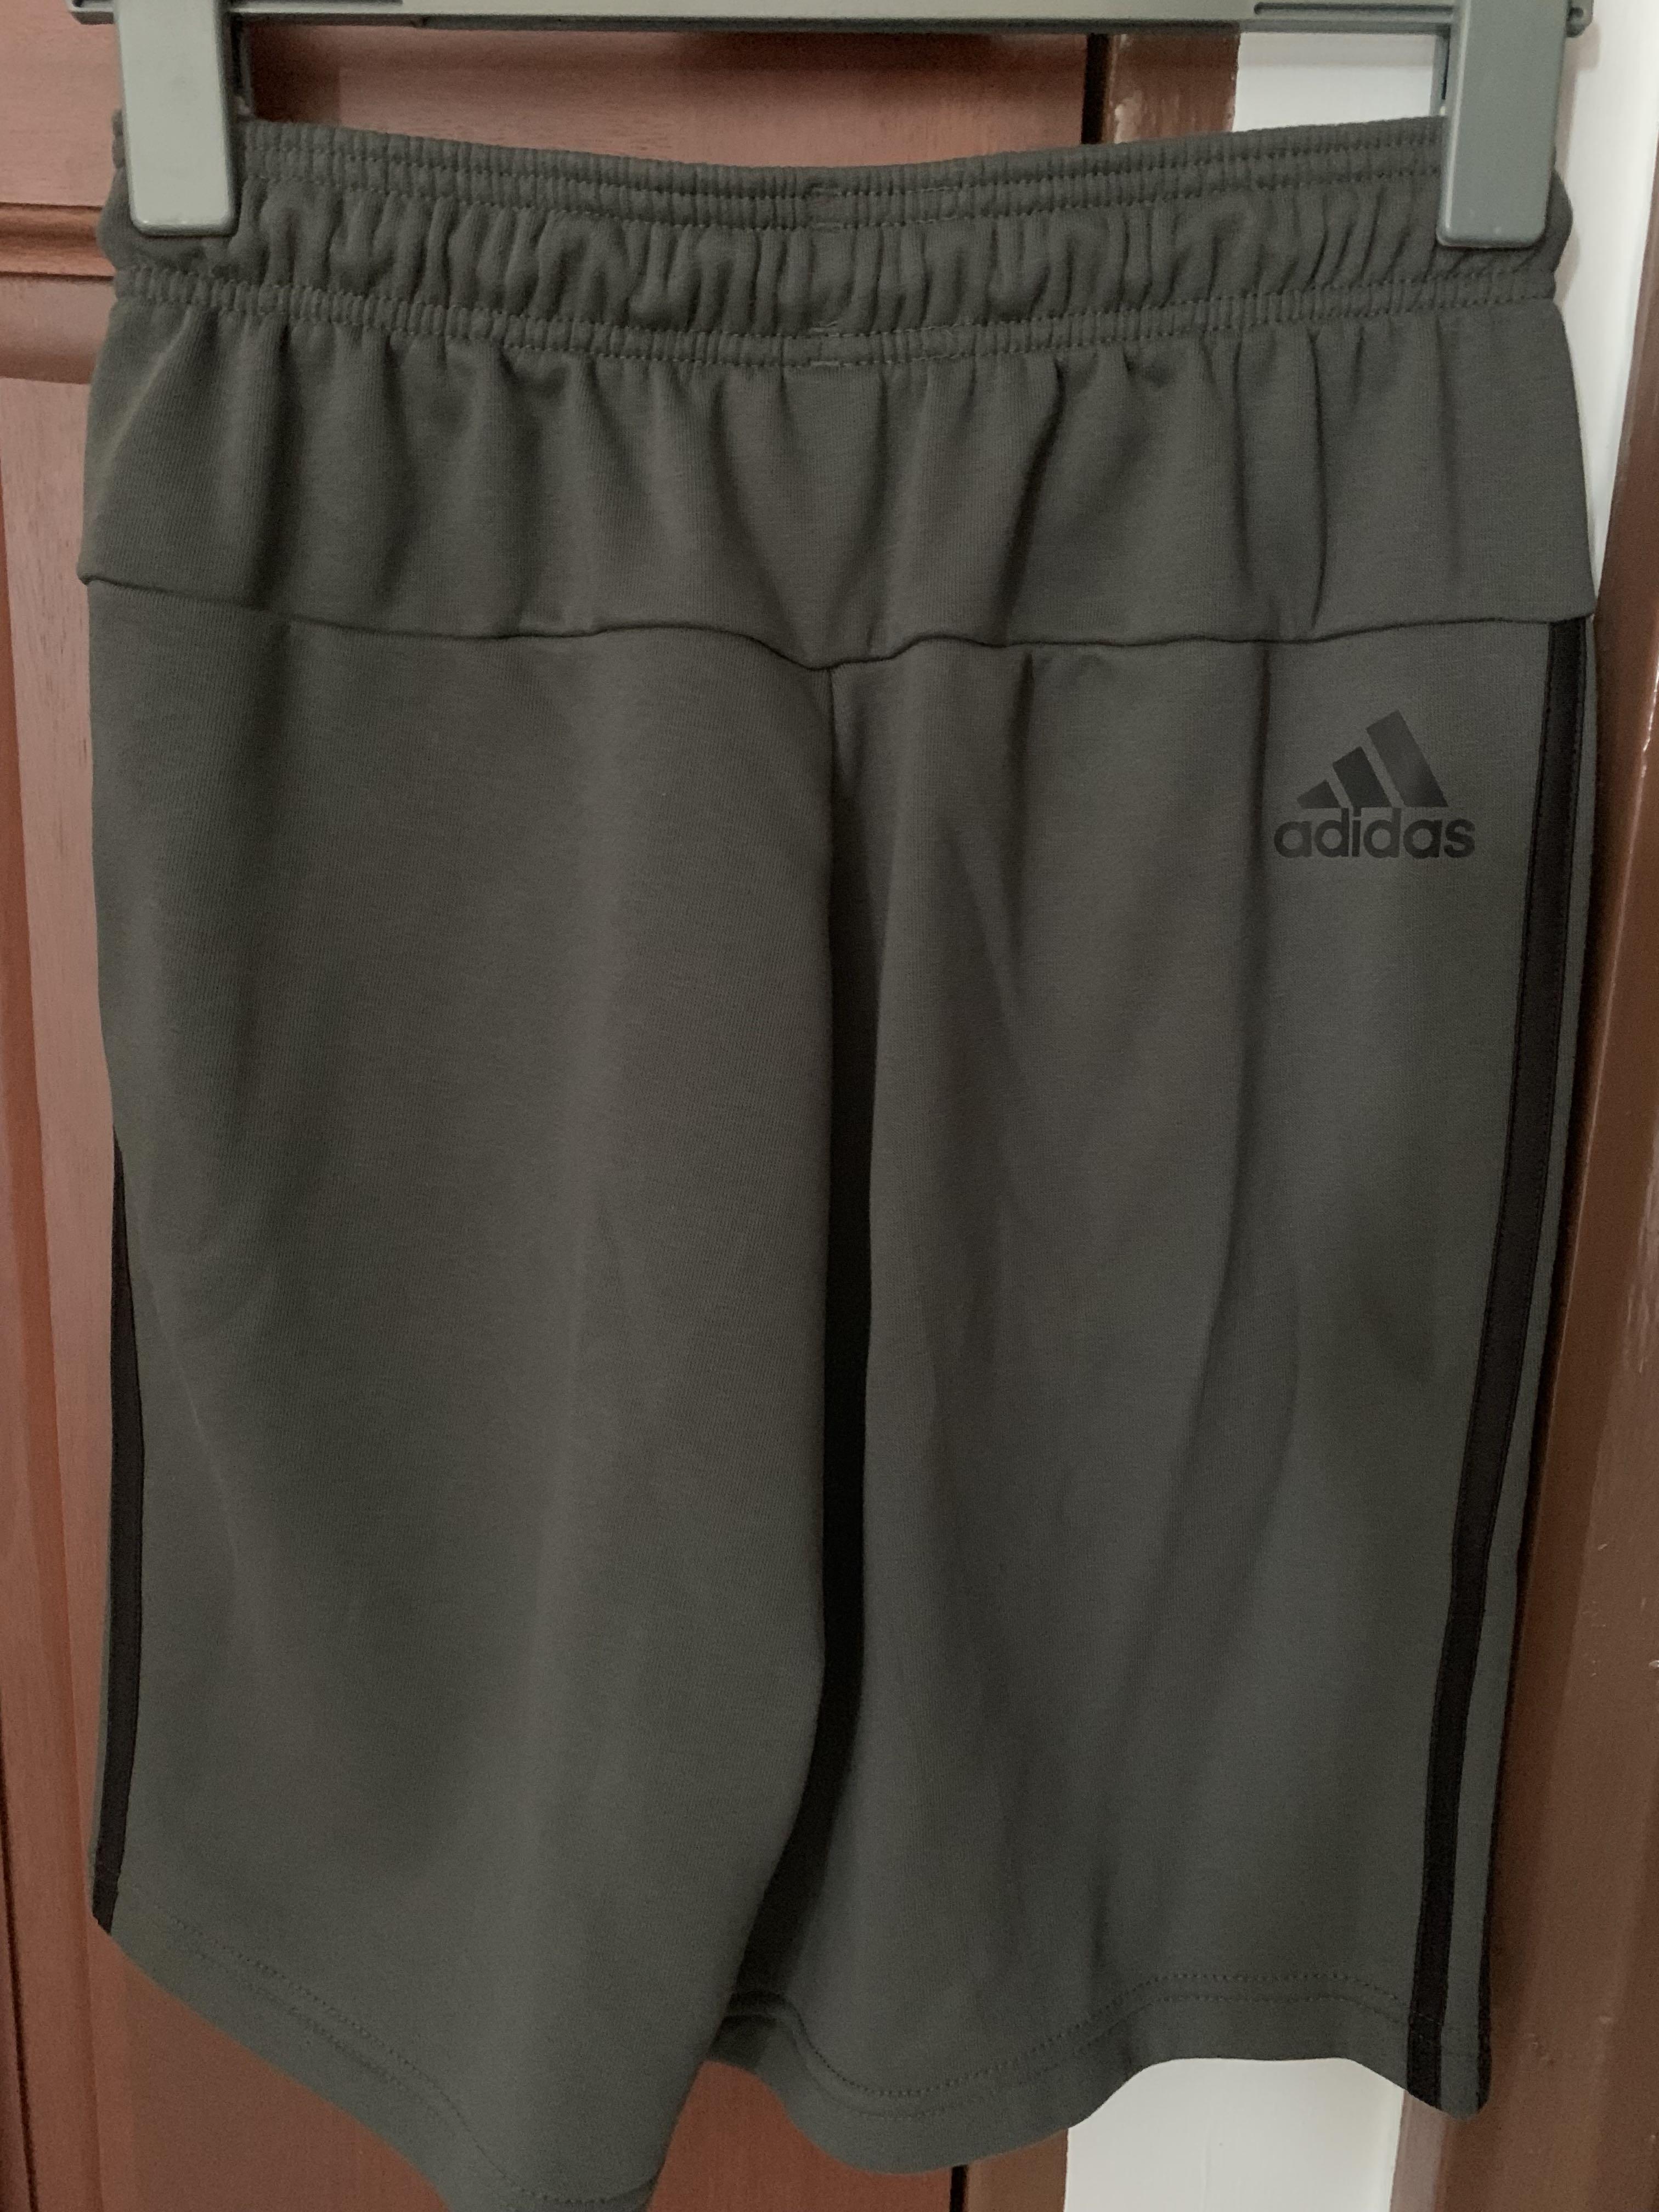 adidas 3 stripe khaki shorts